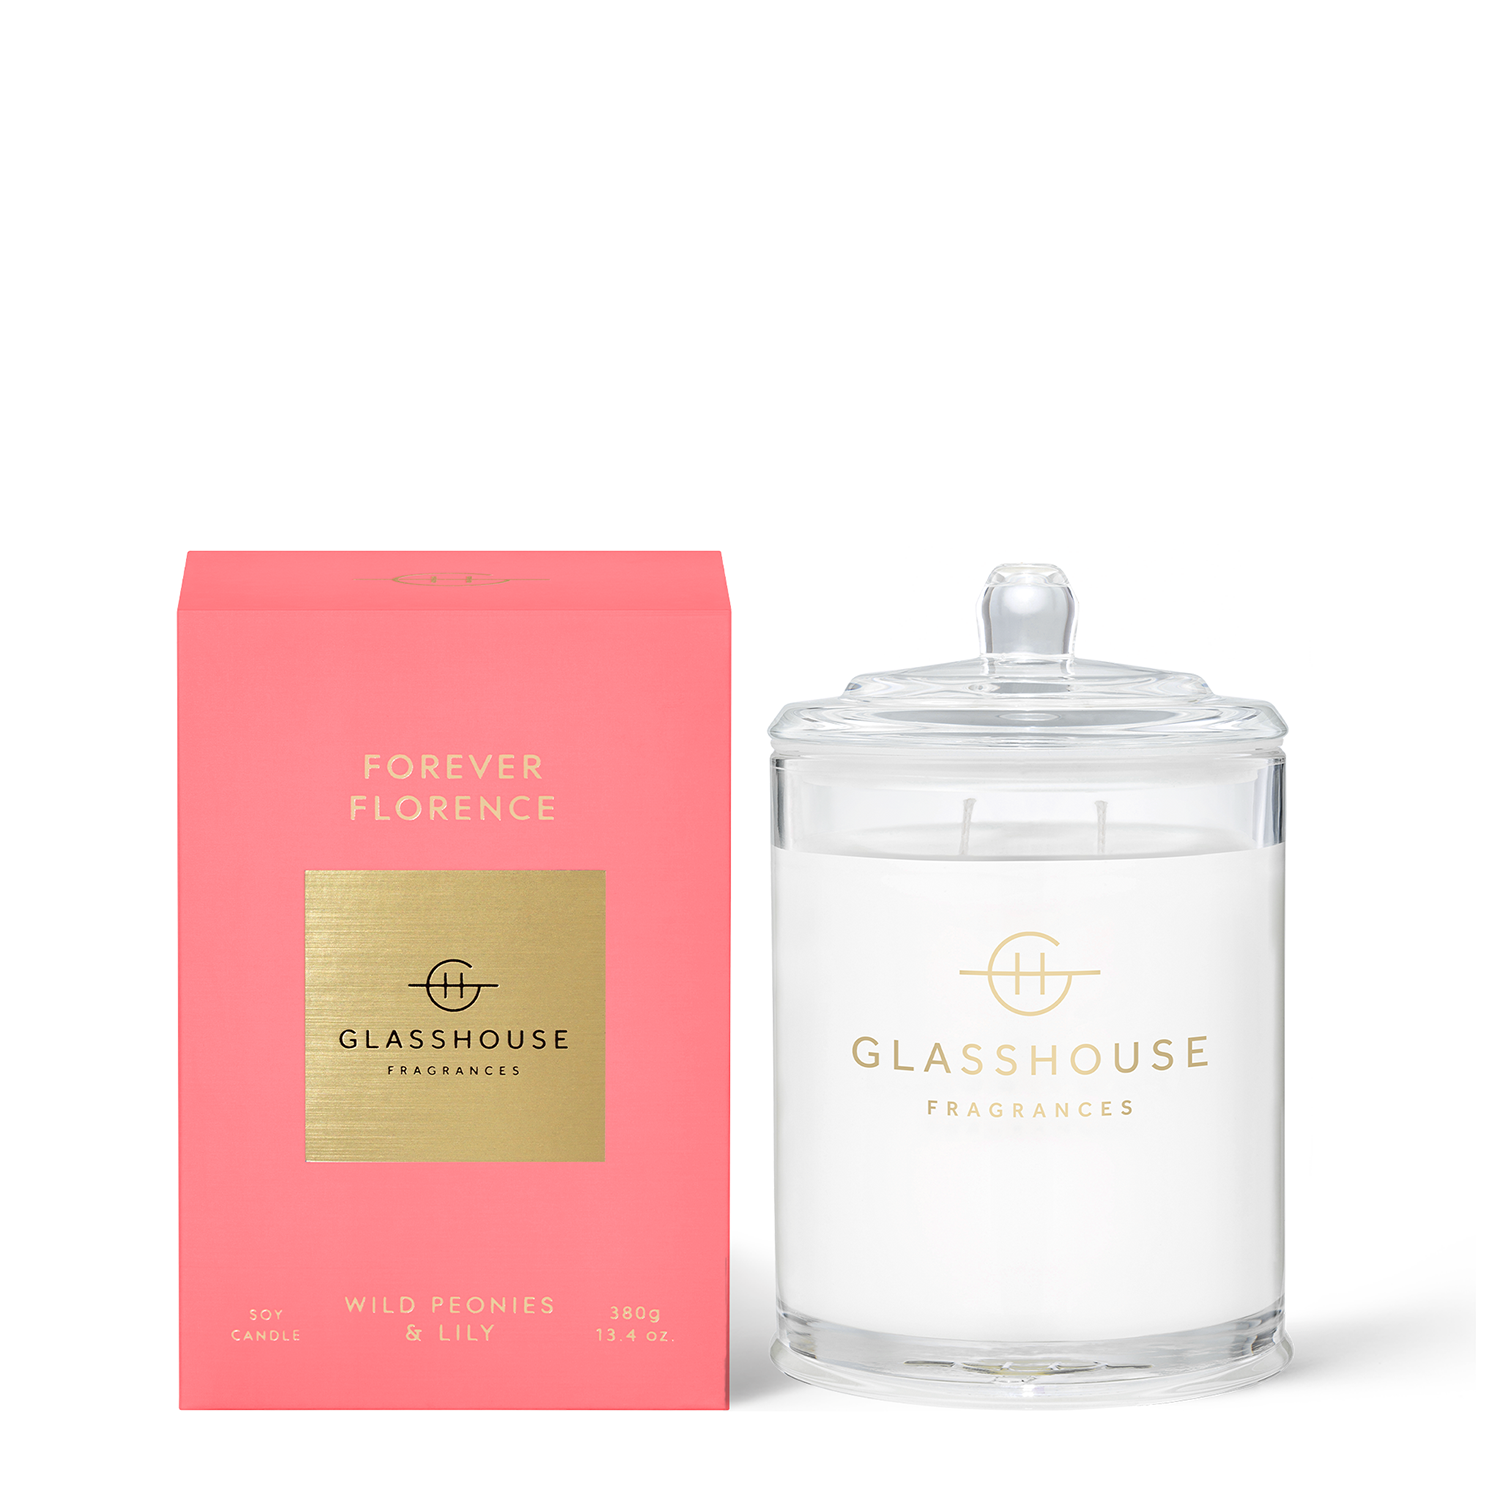 Glasshouse Fragrances - Forever Florence Candle / 13 oz